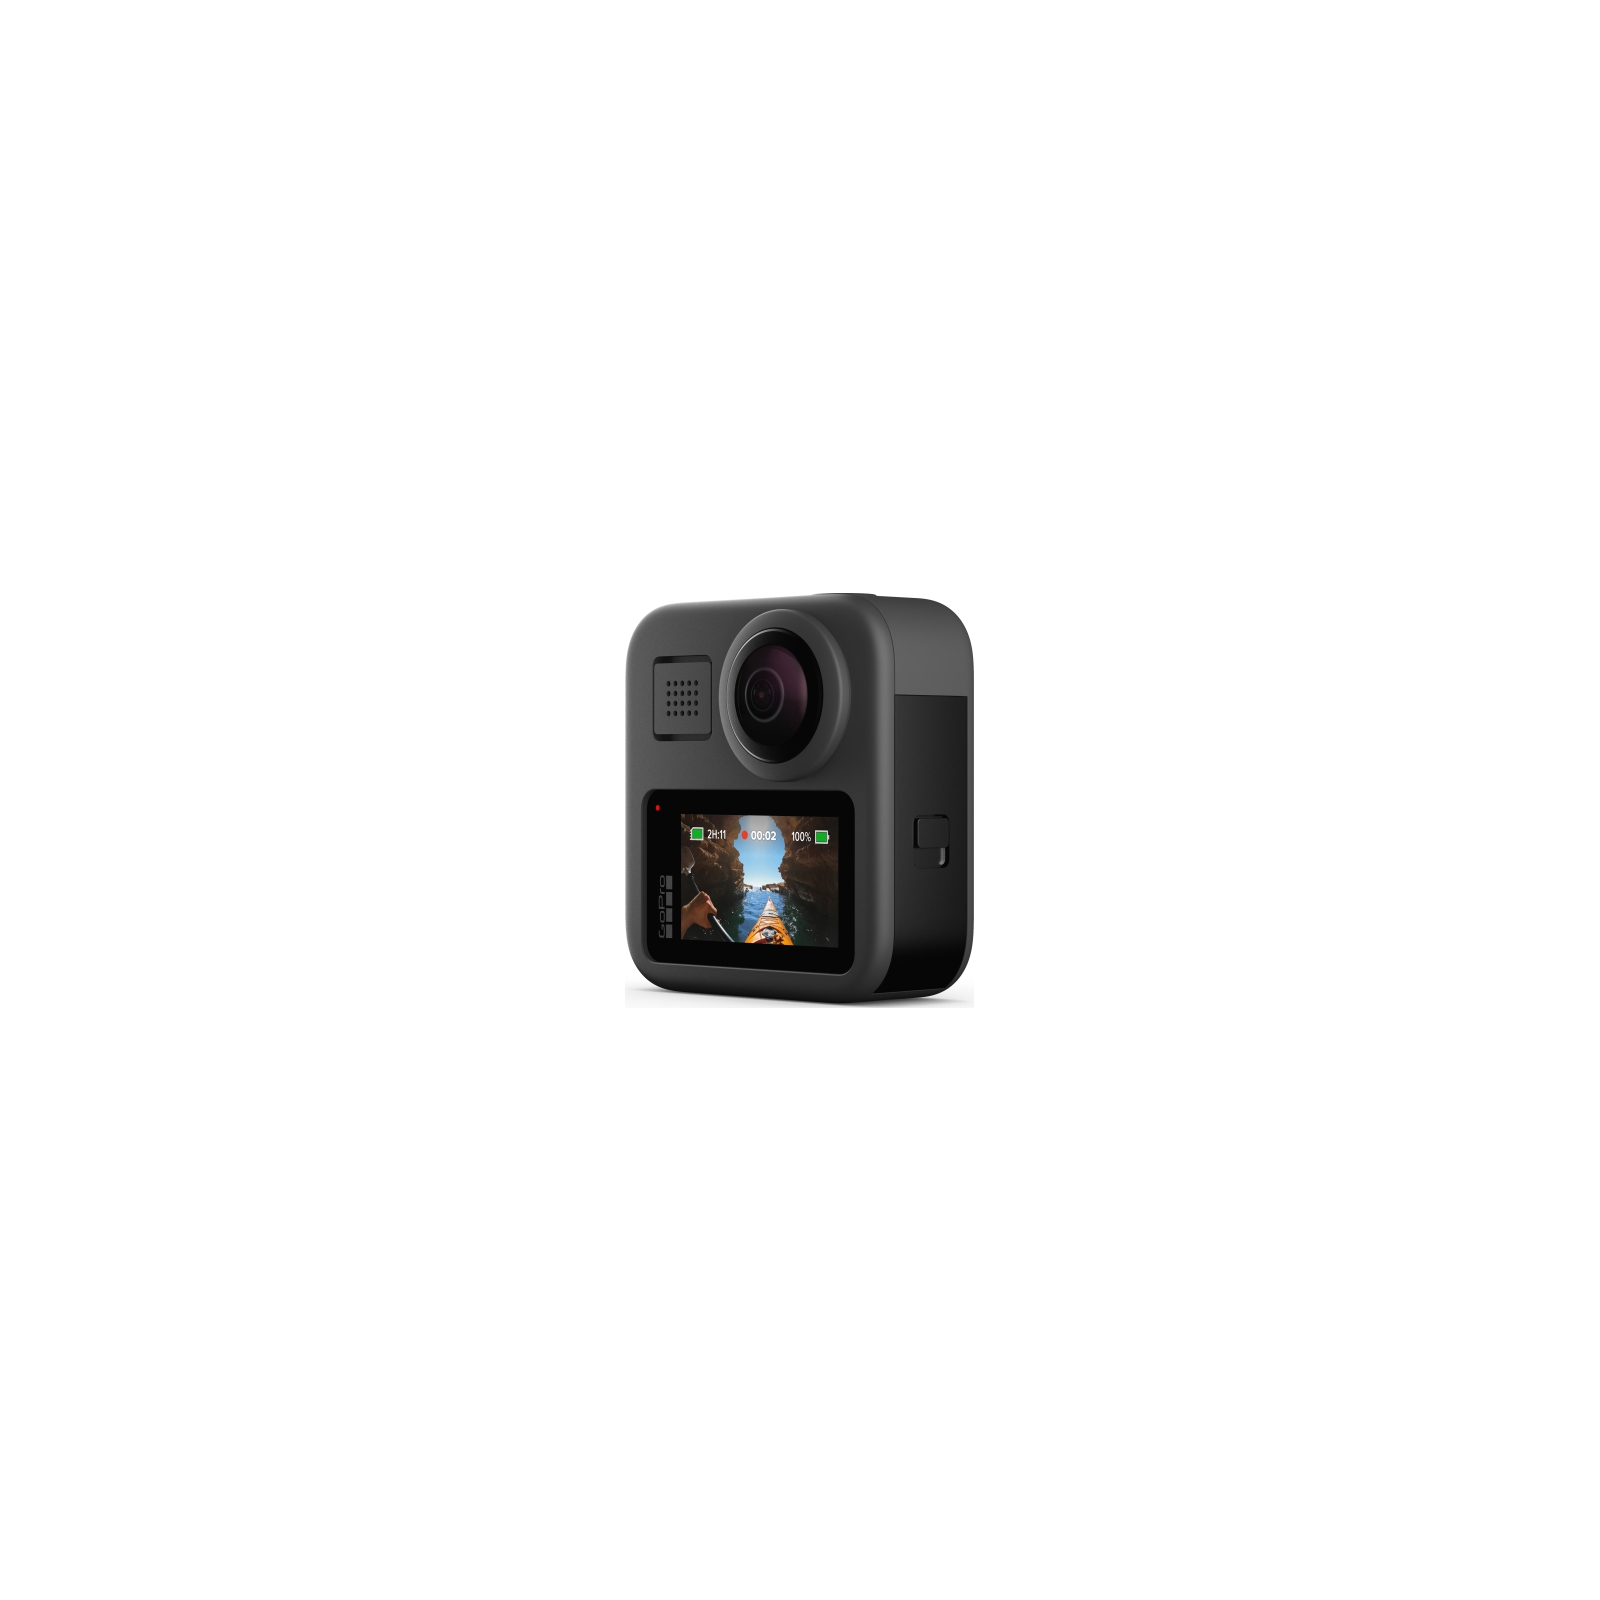 Экшн-камера GoPro MAX Black (CHDHZ-201-RW) изображение 9